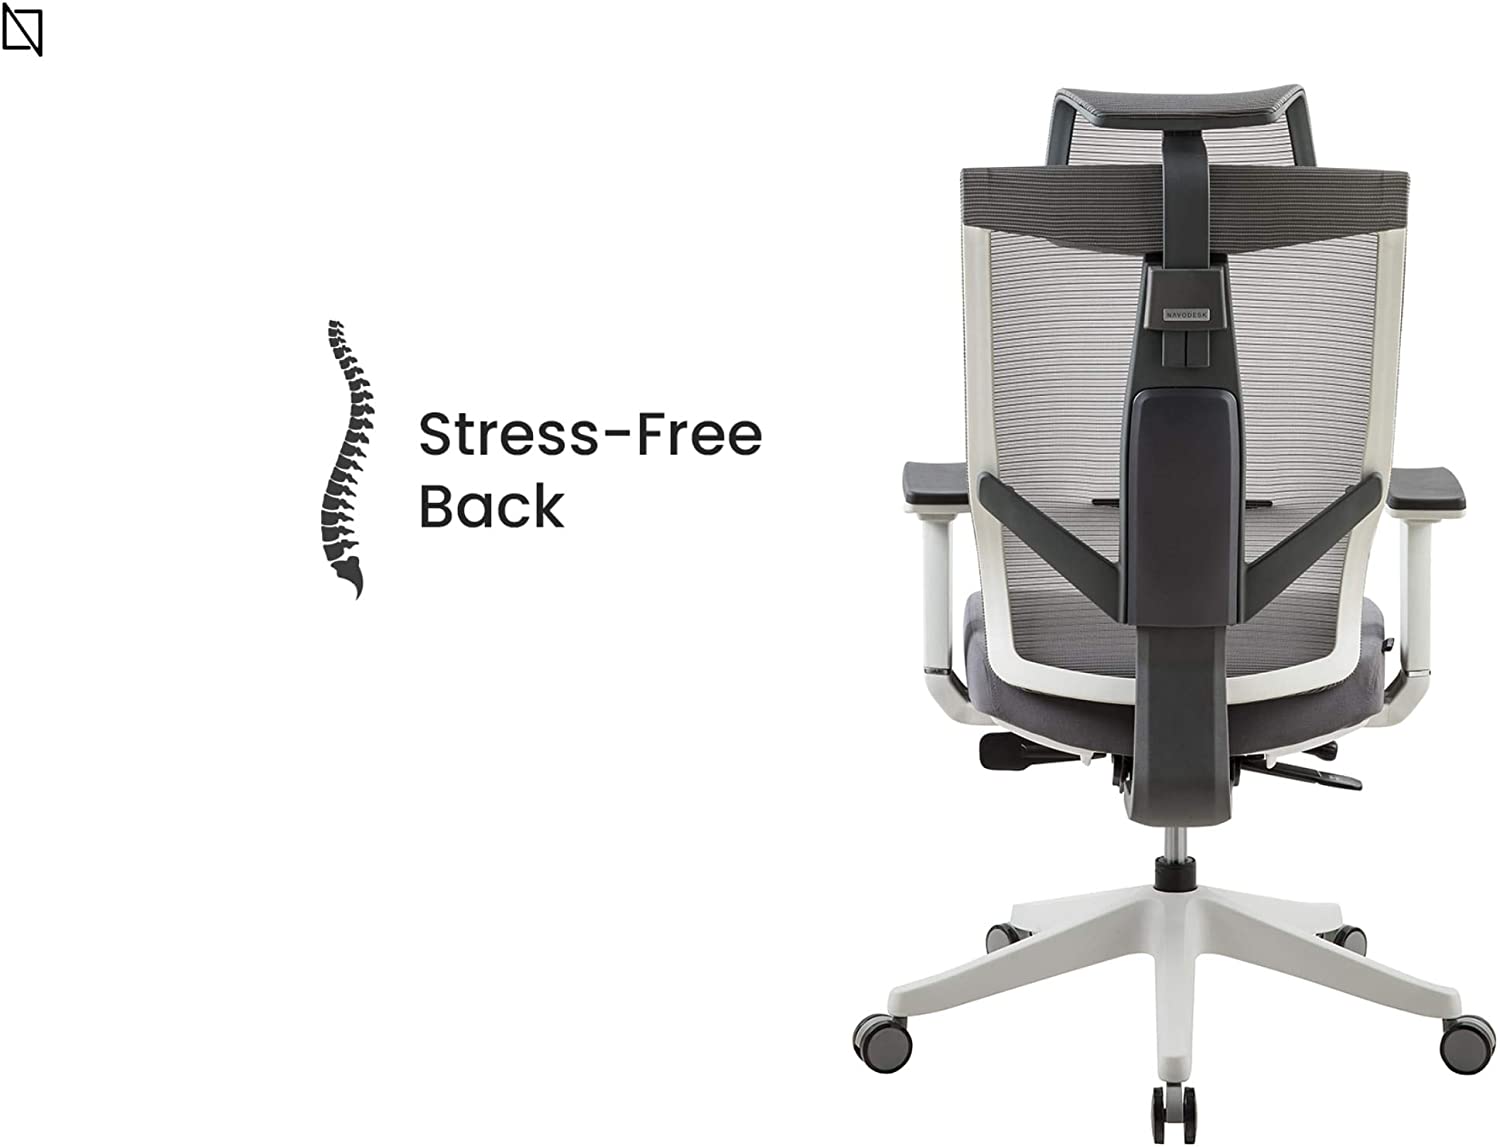 Back Stress Free Aero Fabric Chairs - Navodesk